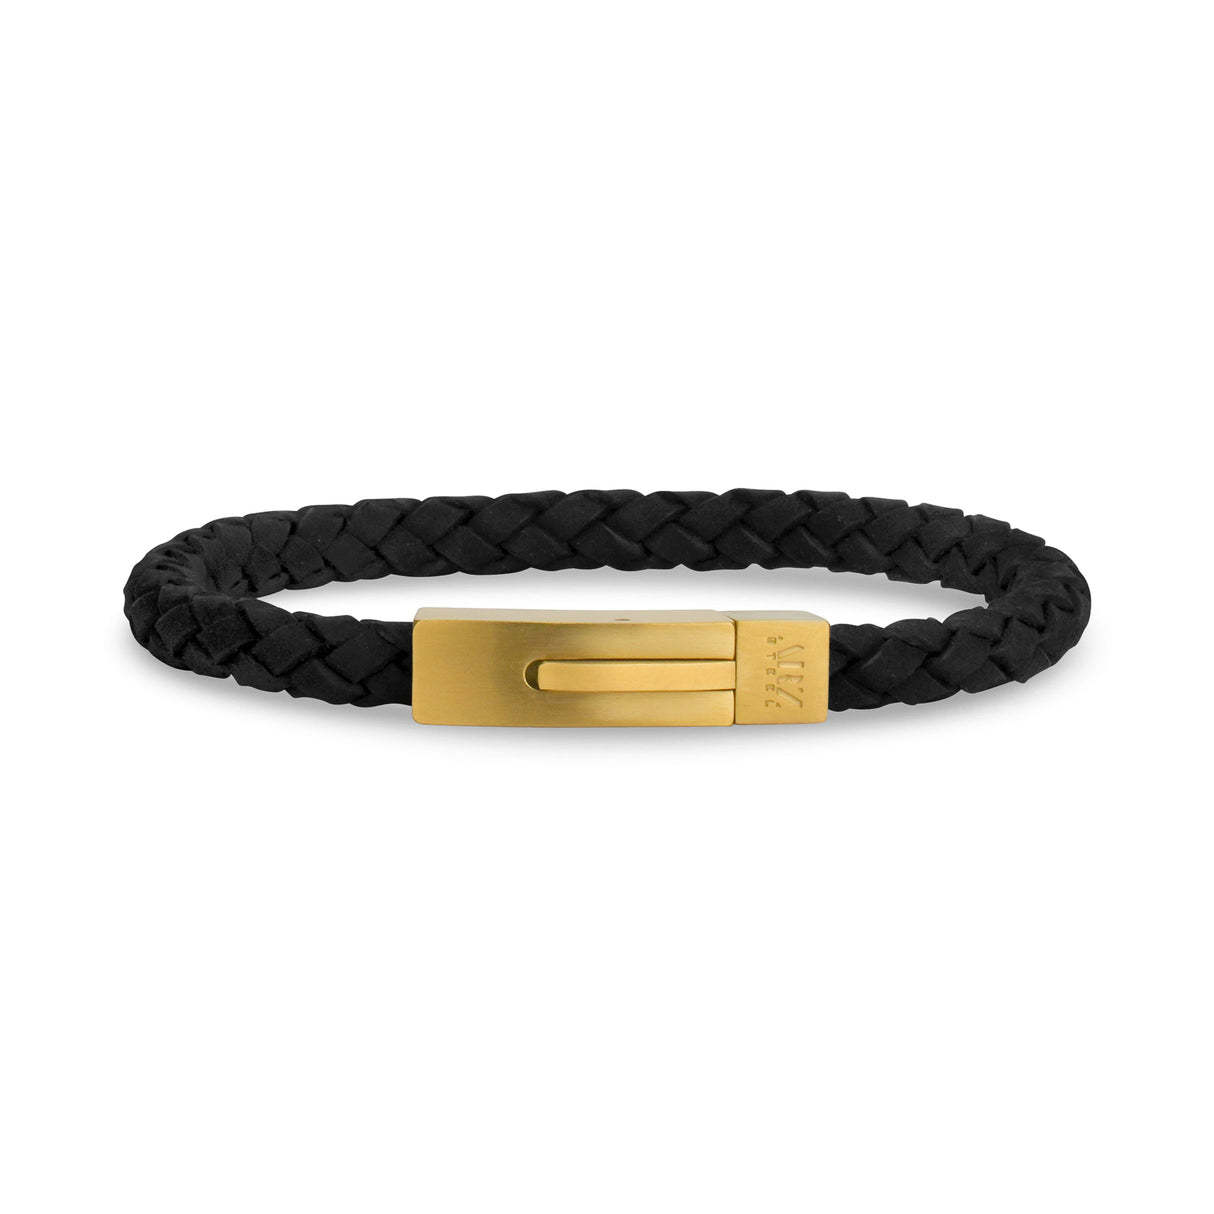 Bracelet en cuir noir - 6MM - Bracelets cuir homme - The Steel Shop